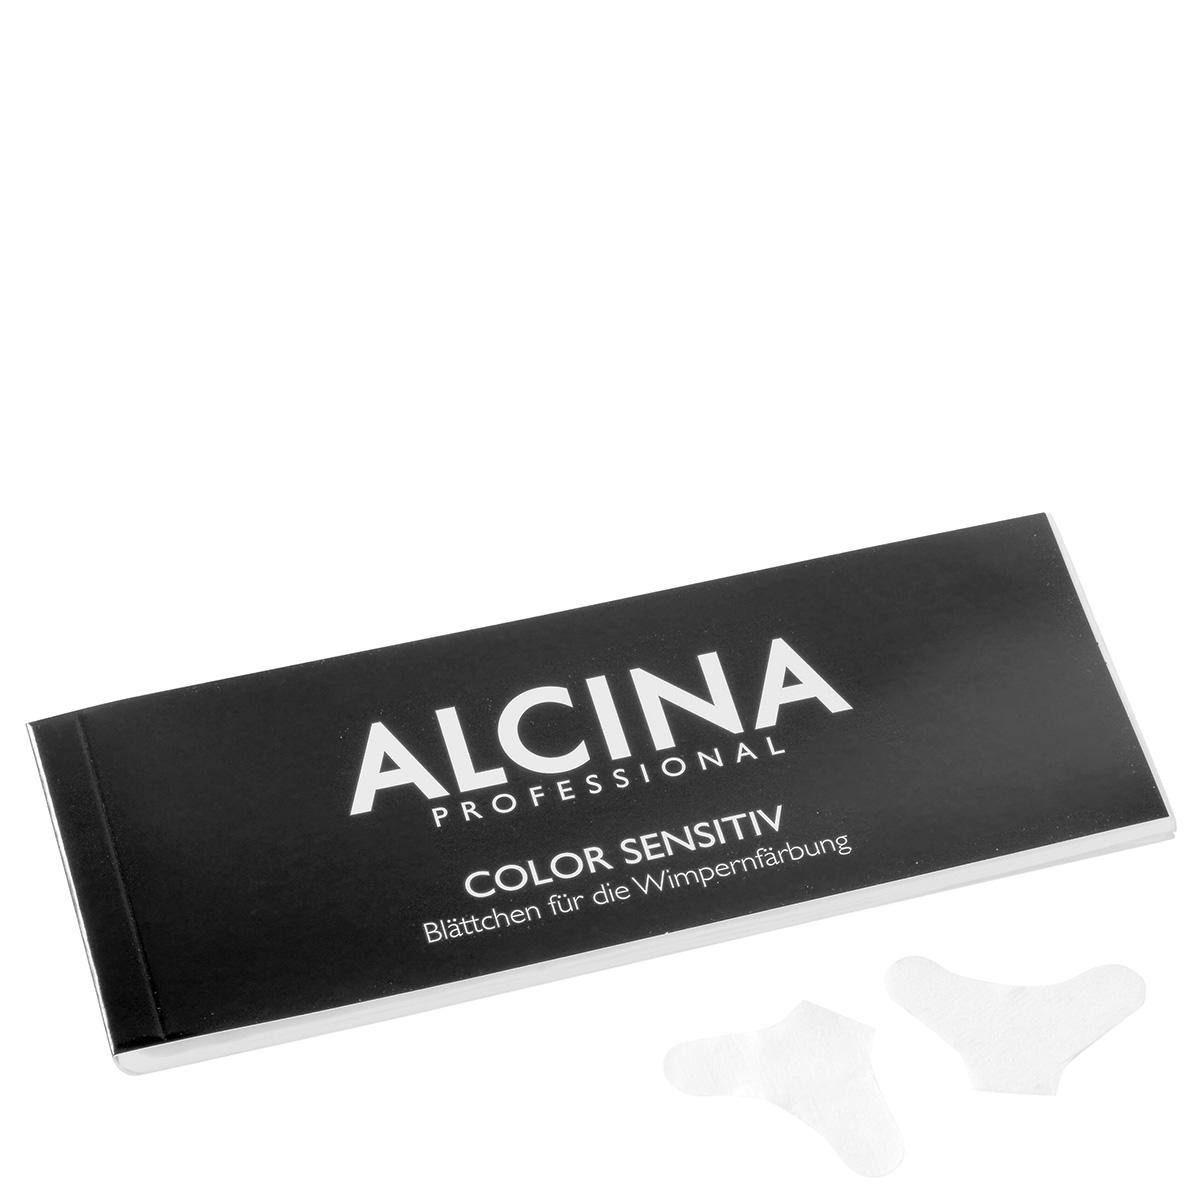 Alcina Color Sensitive Eyelash Brushes 1 Block 96 Blatt - 1